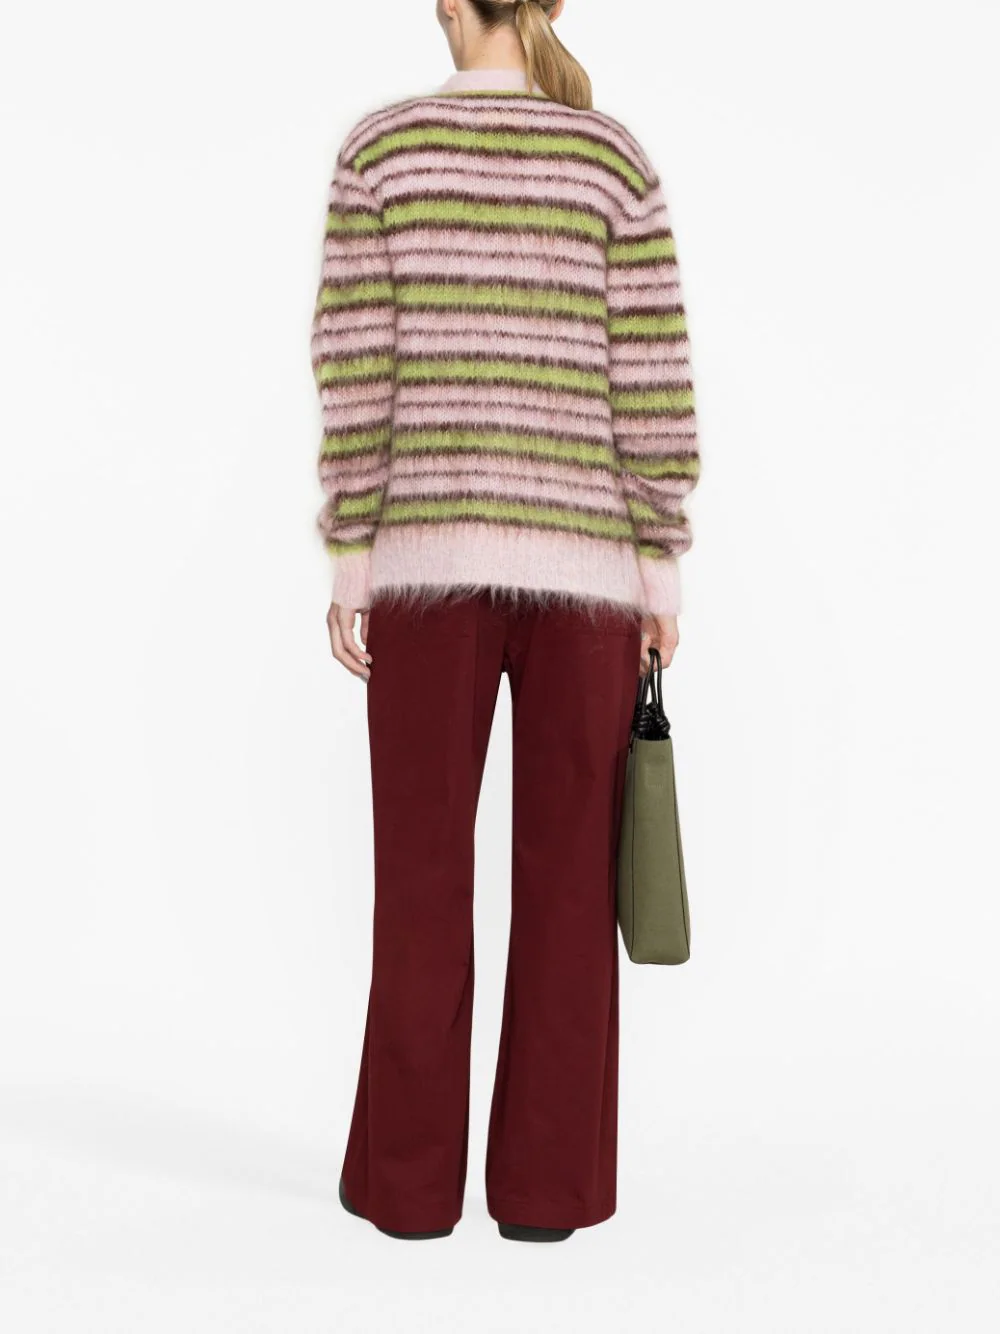 Marni Pink Striped Sweater